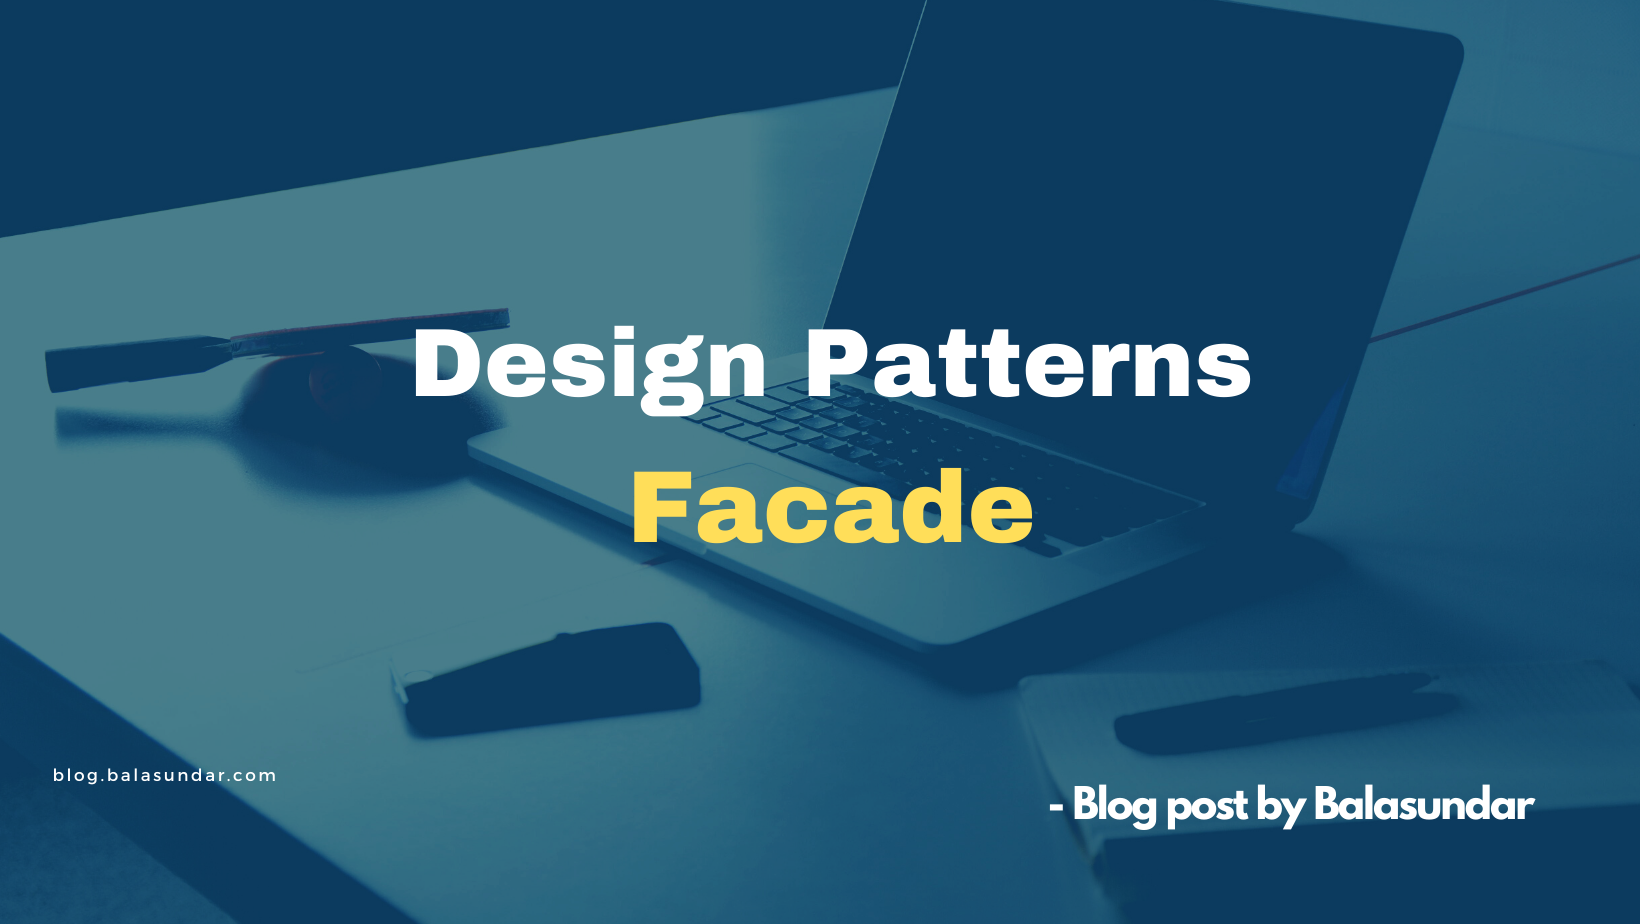 Decorator design pattern | PPT